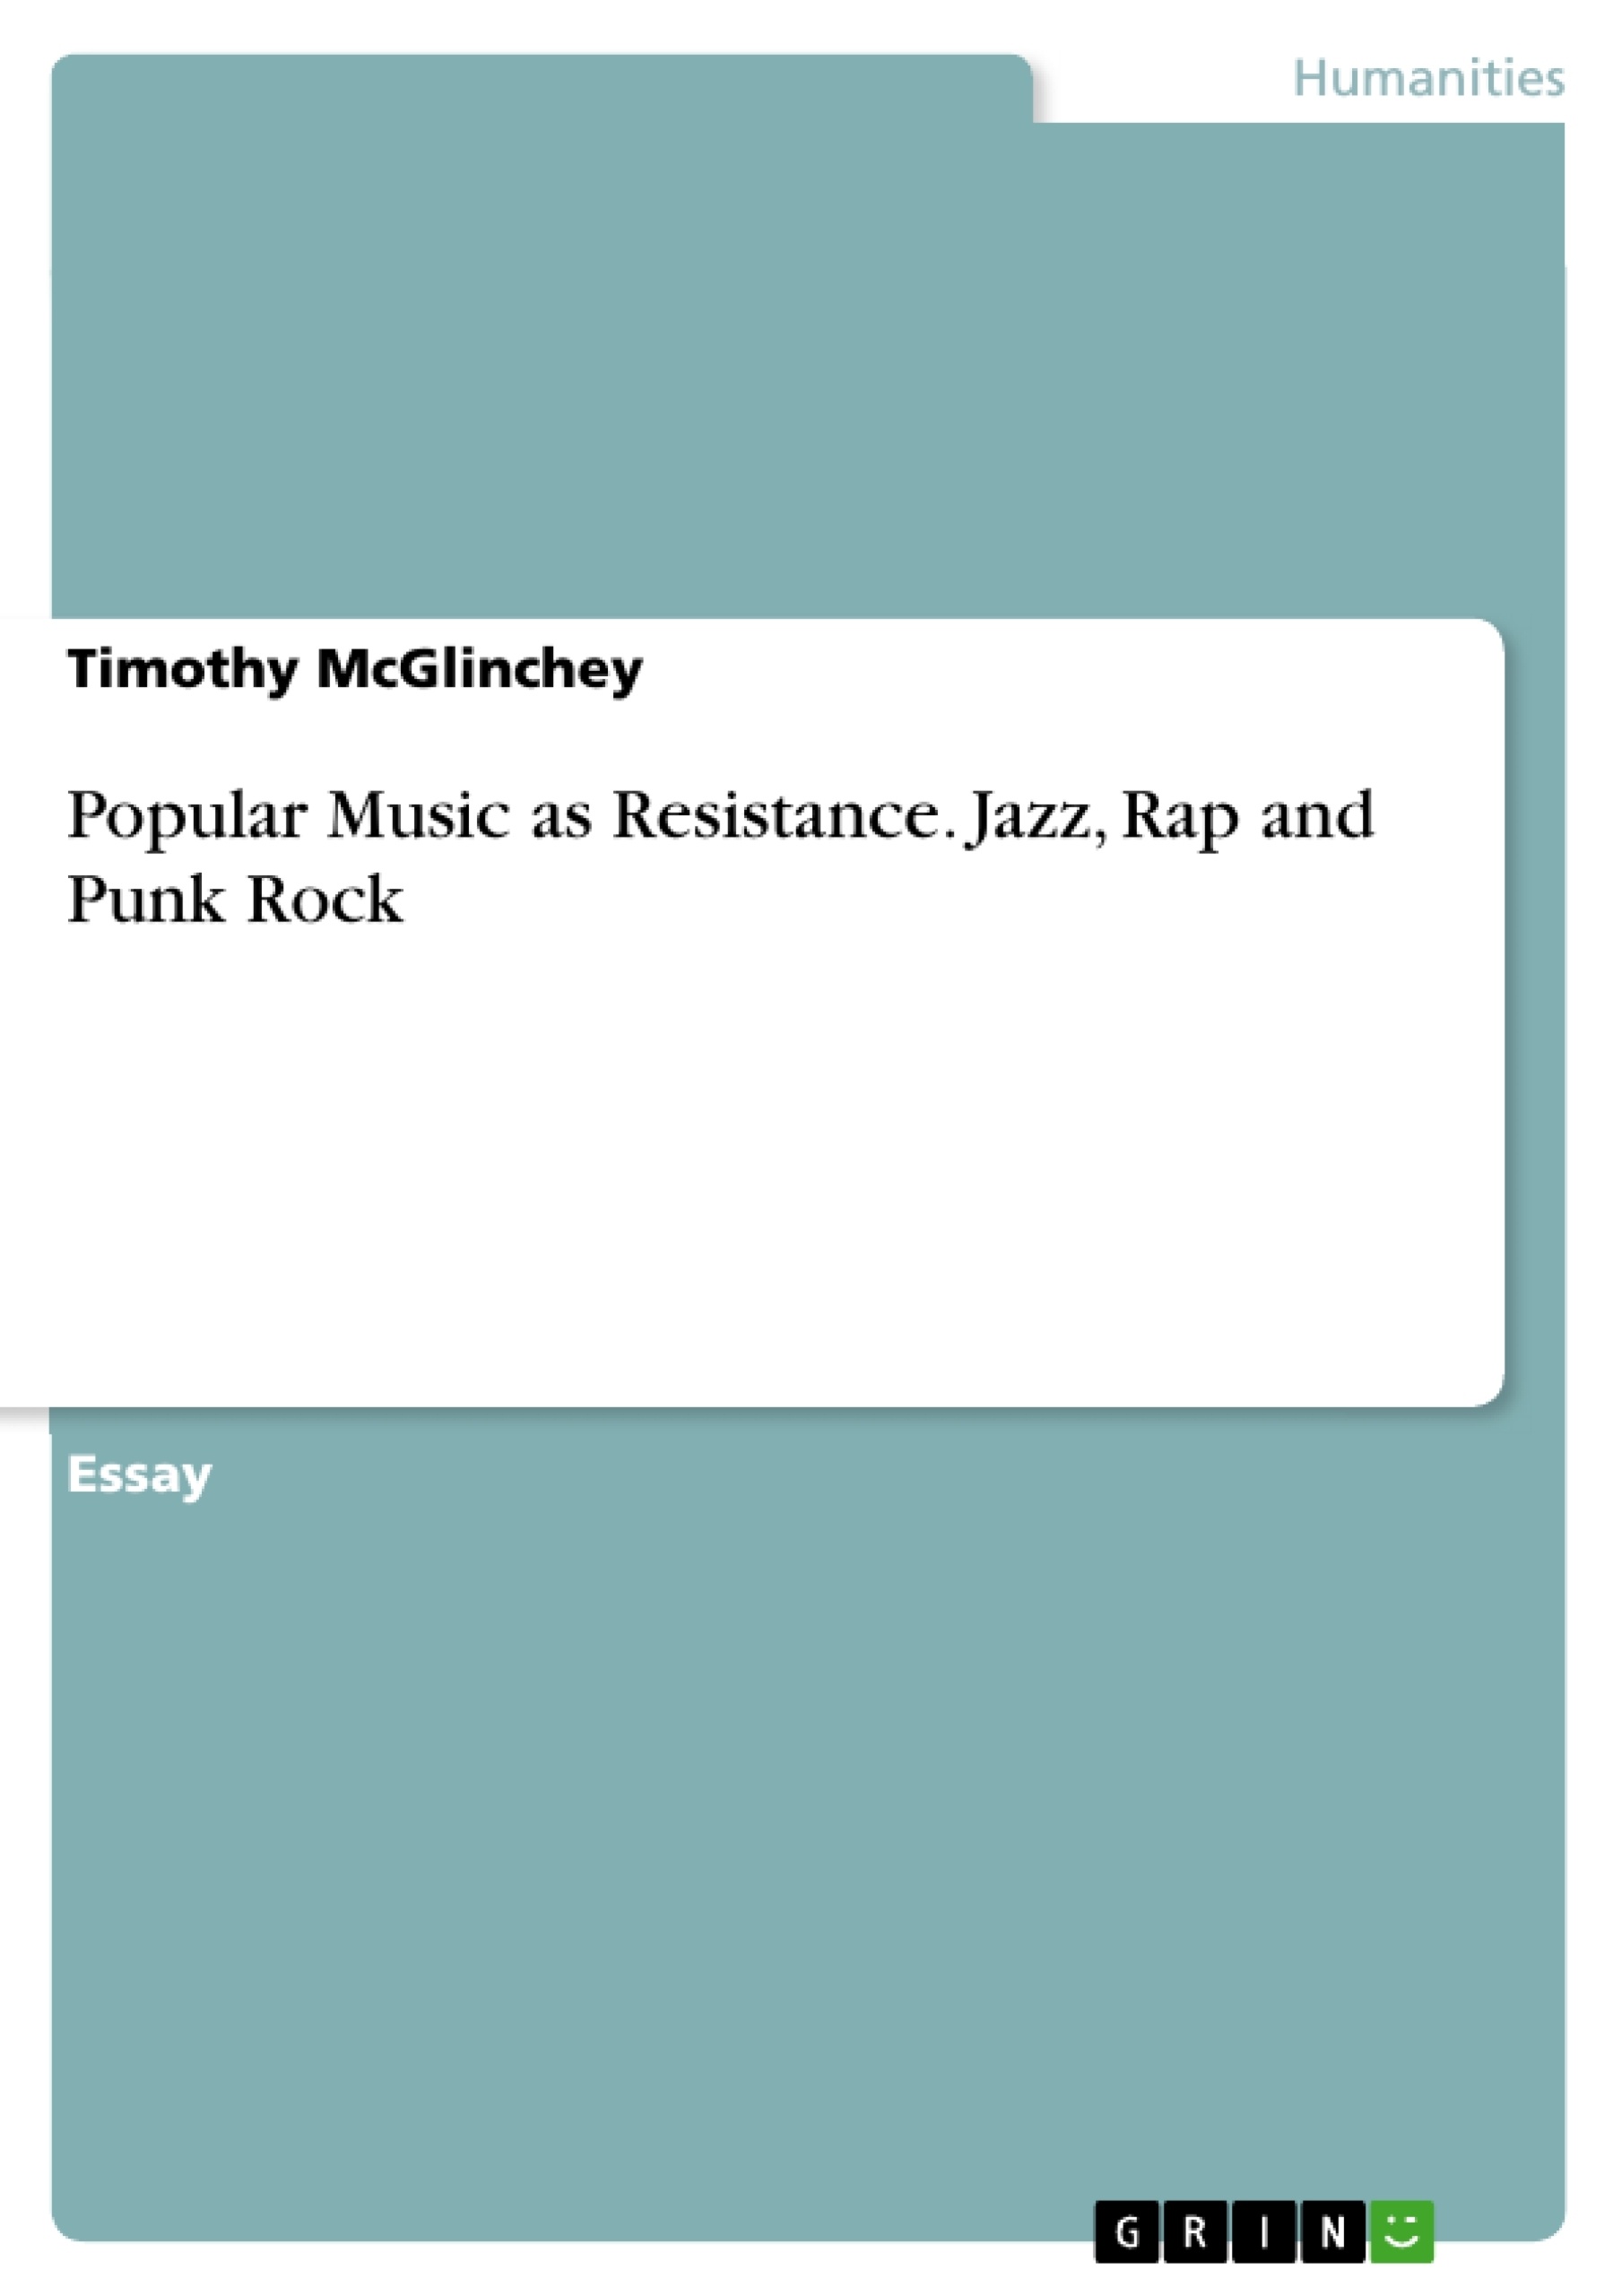 Title: Popular Music as Resistance. Jazz, Rap and Punk Rock